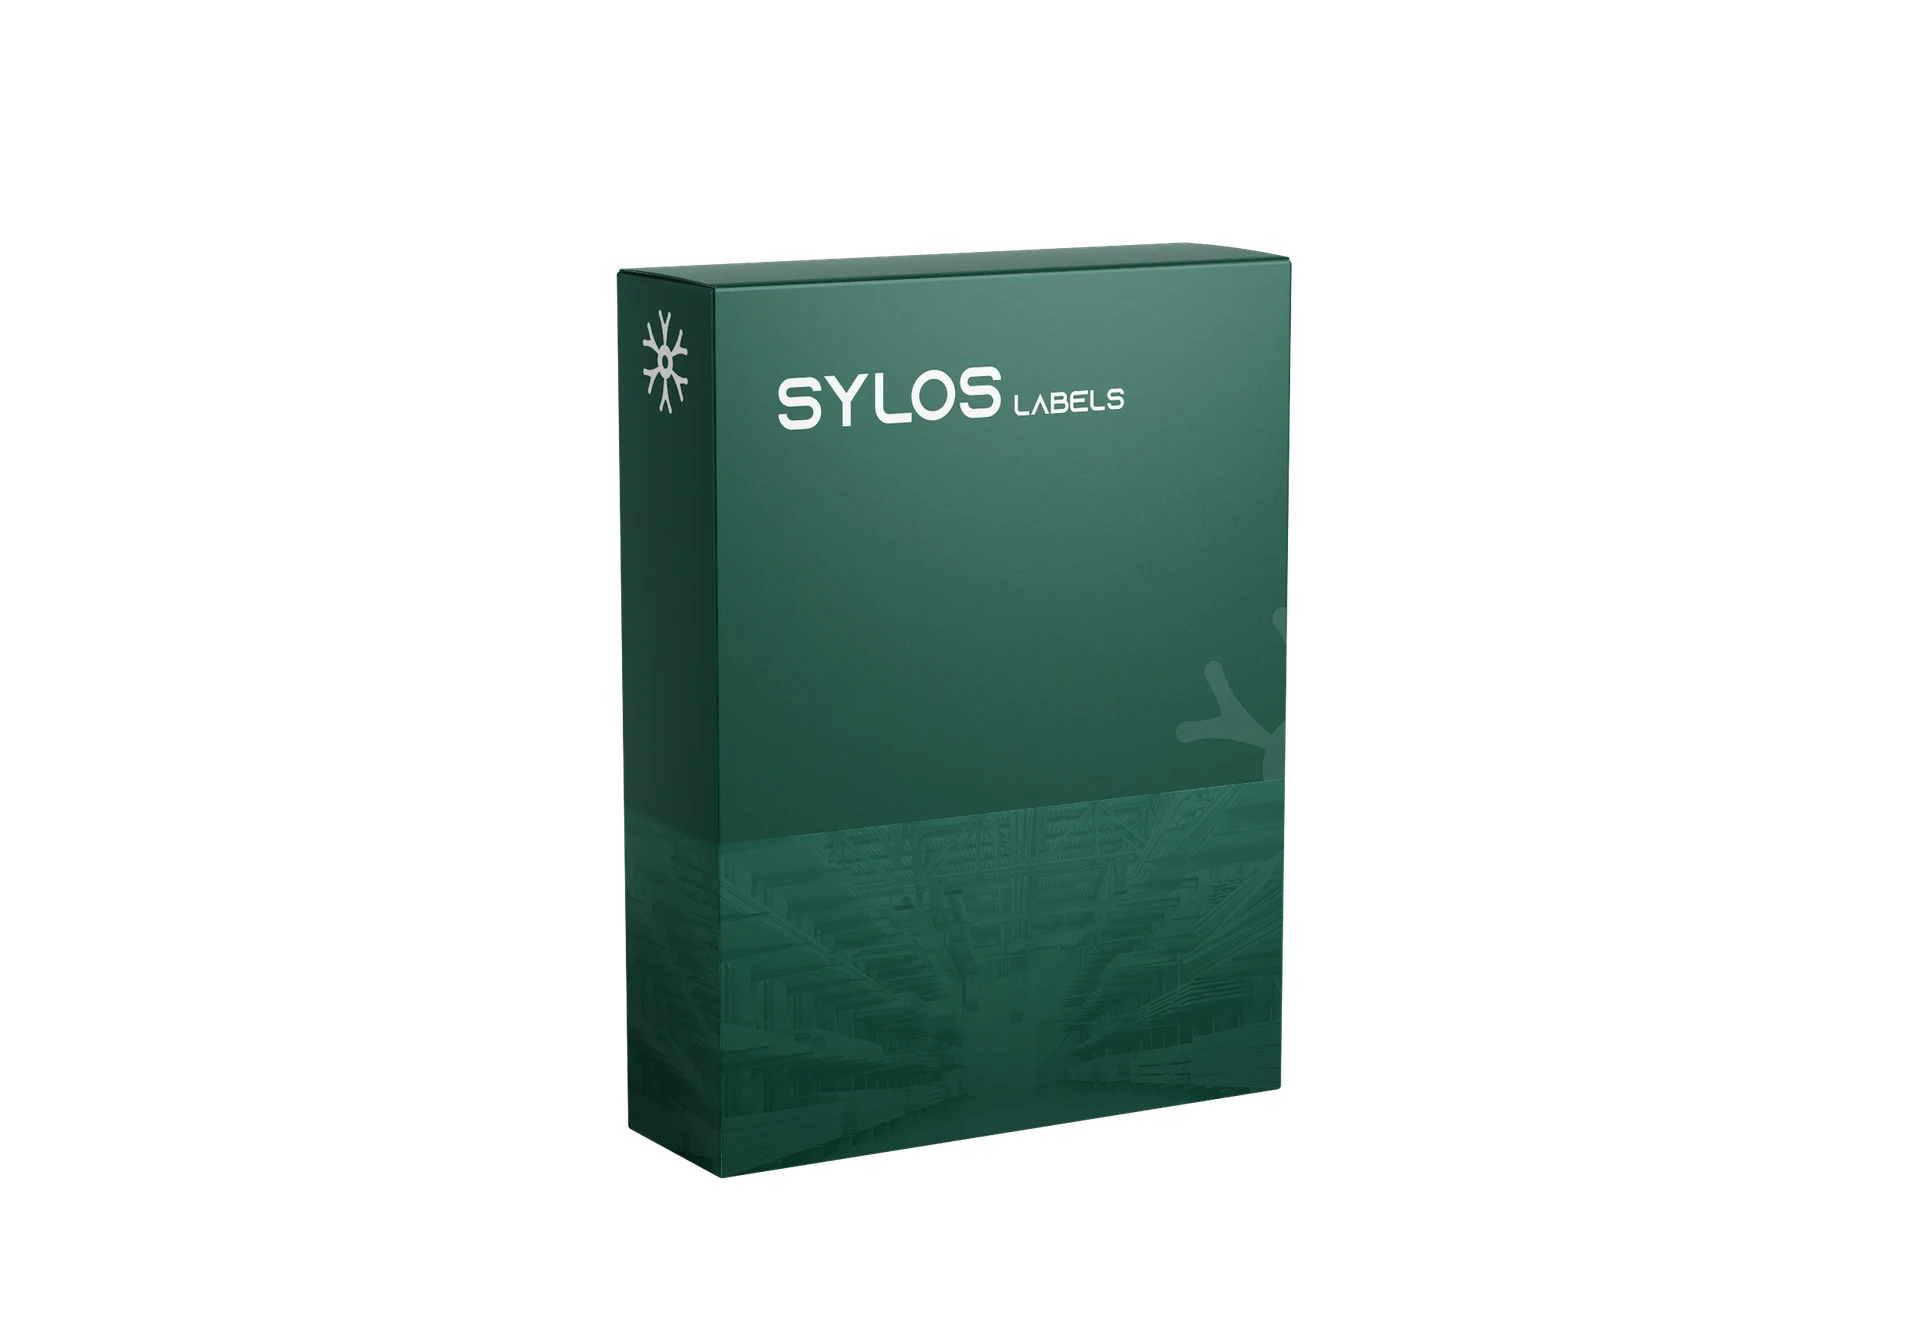 Sylos labels